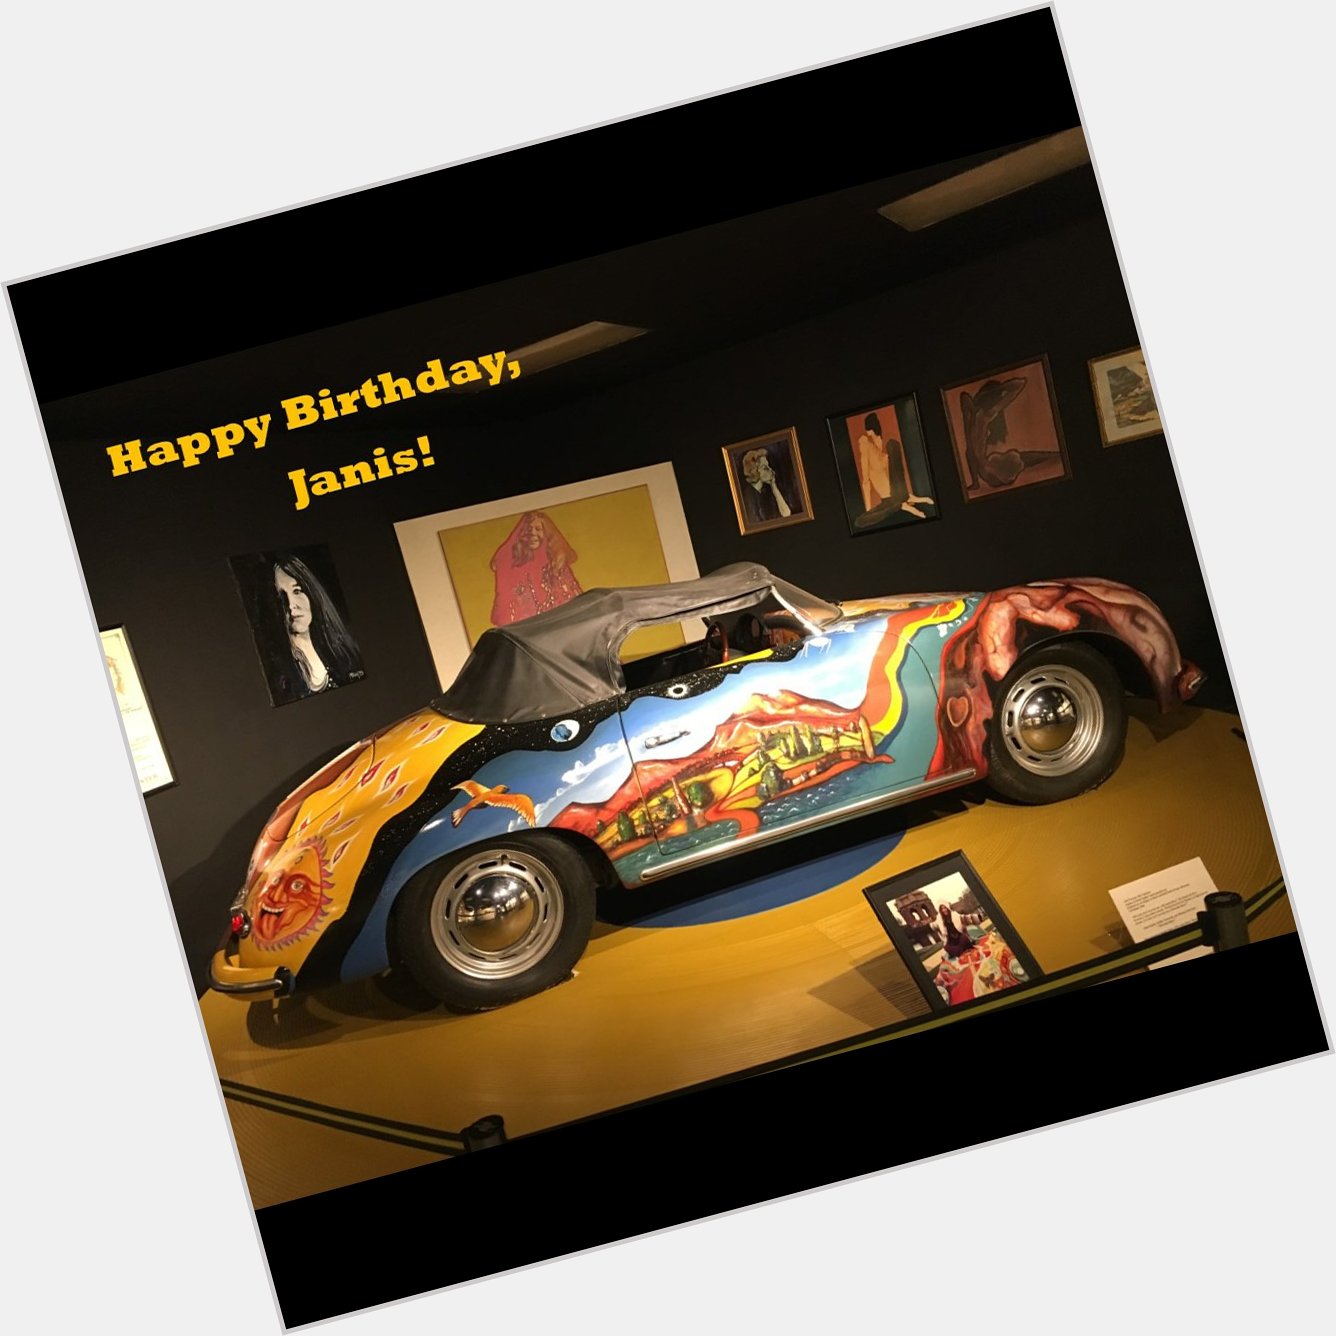 Happy Birthday Janis Joplin! 

What\s your favorite Janis song? 